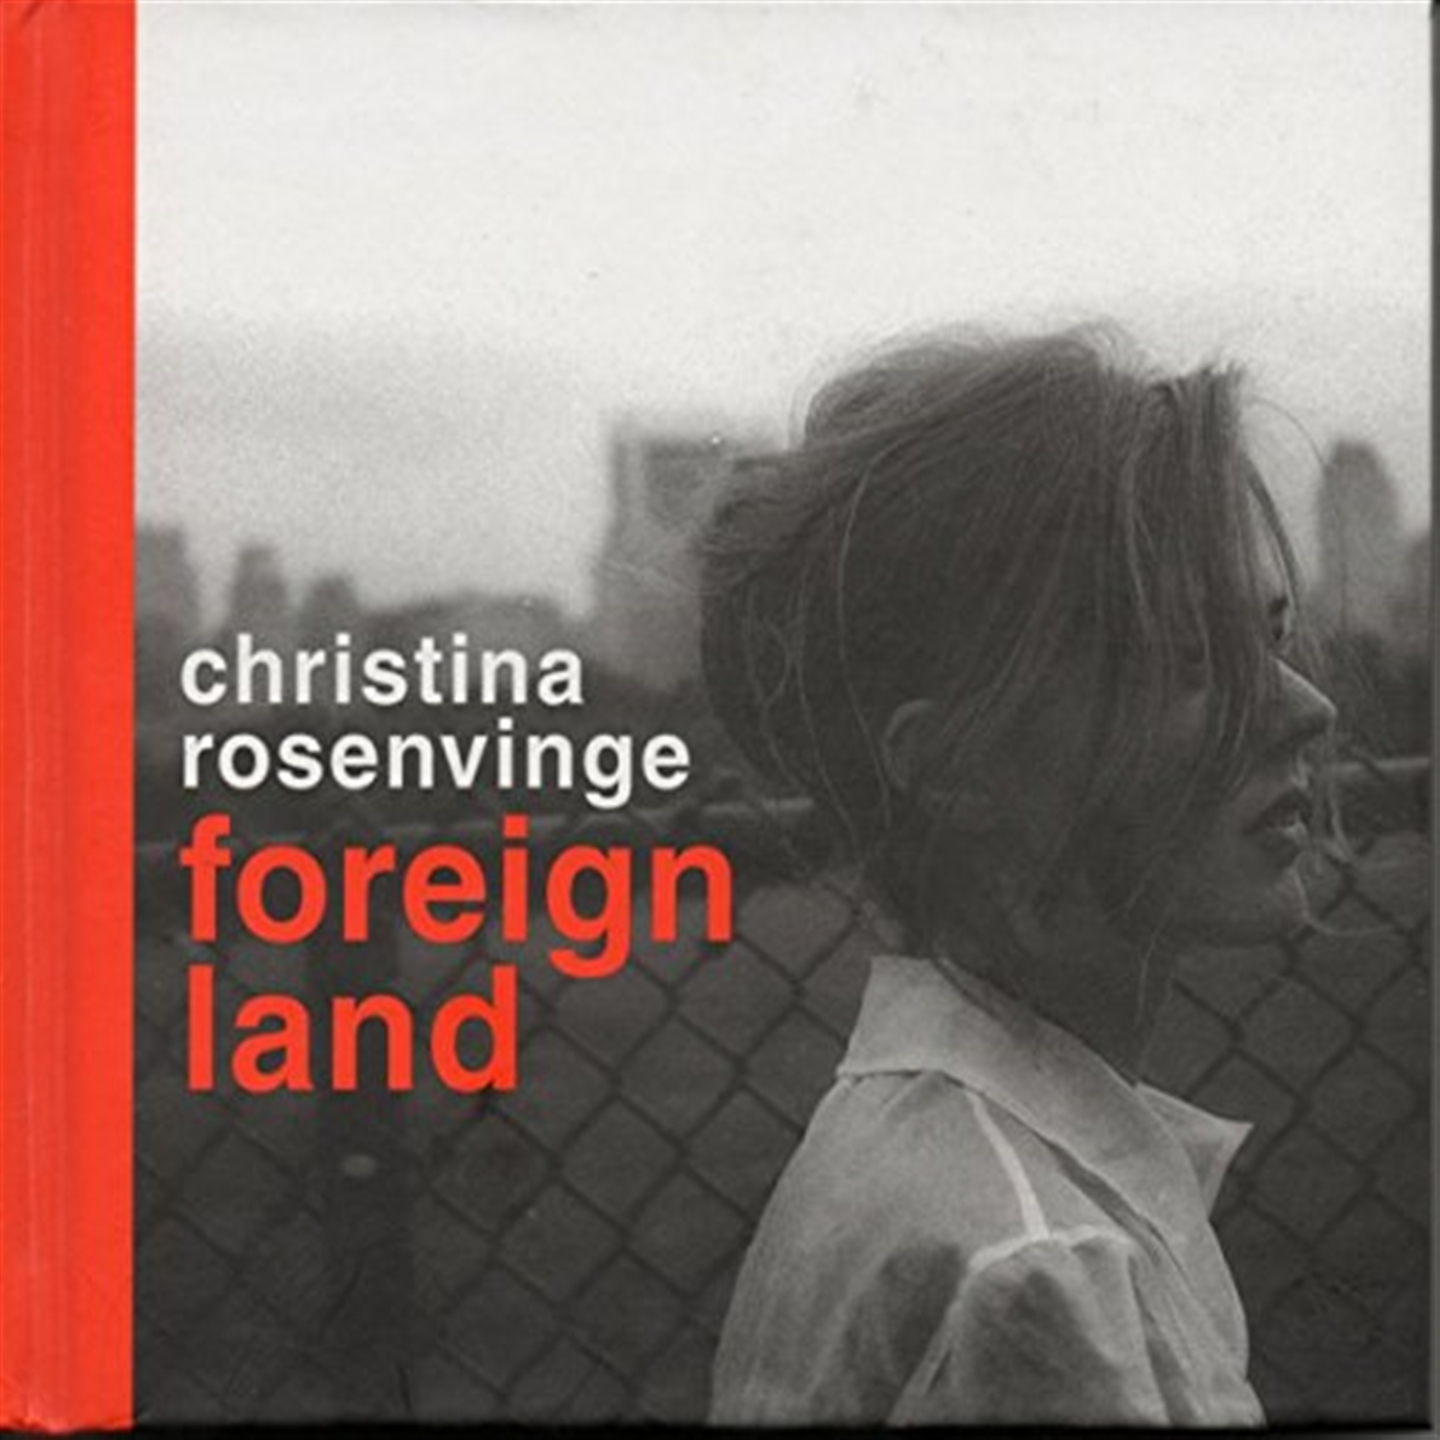 Rosenvinge Christina - Foreign Land - Photo 1 sur 1